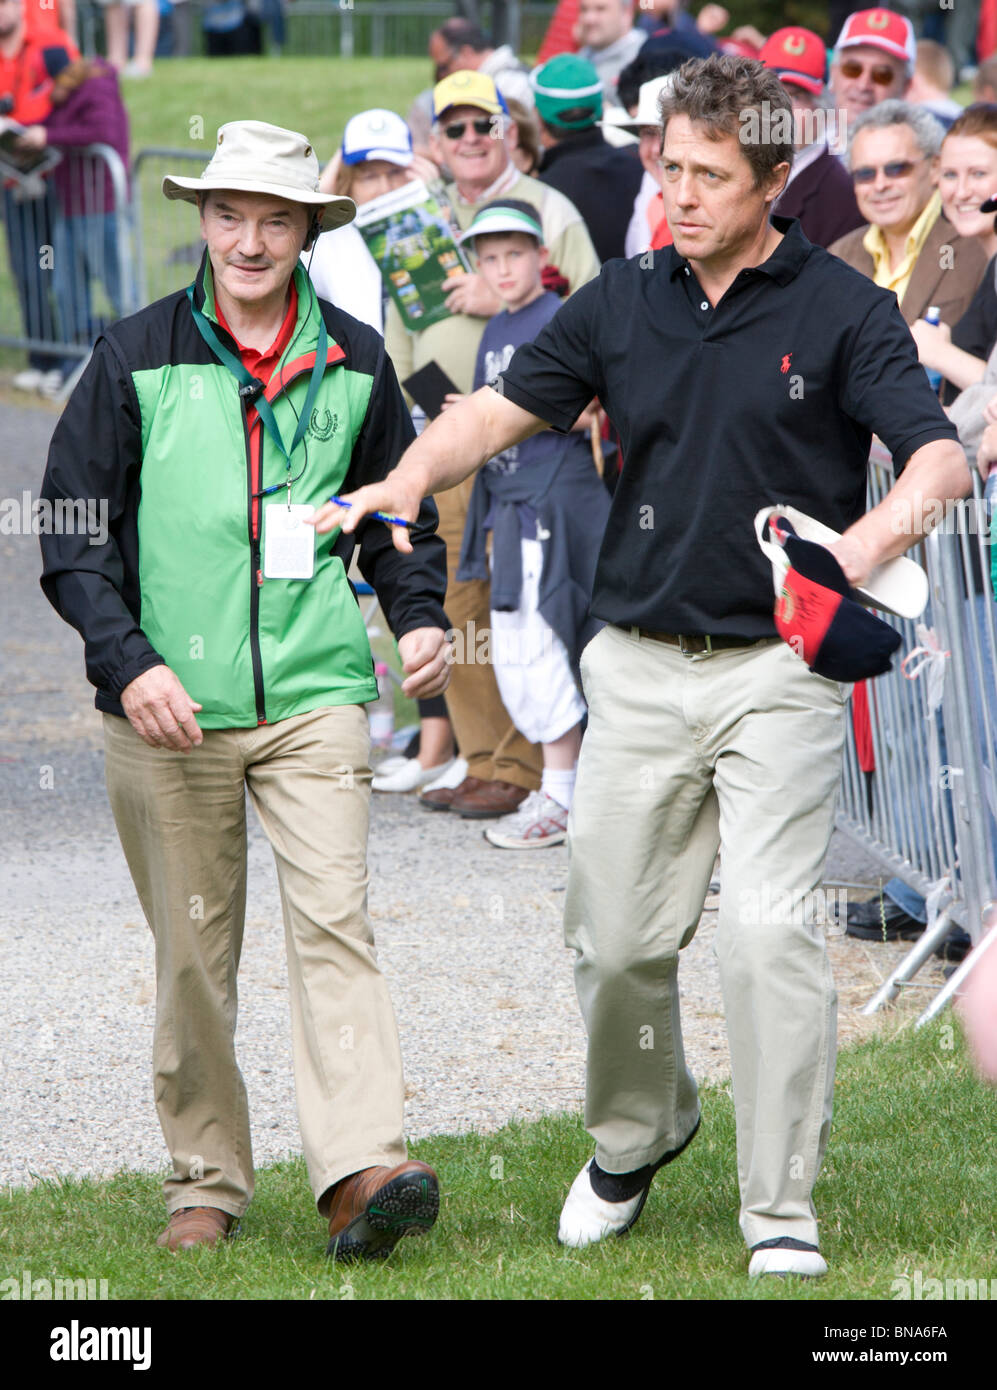 Hugh Grant at JP McManus Pro-Am Golf Tournament, Adare Ireland 6th July 2010 Stock Photo